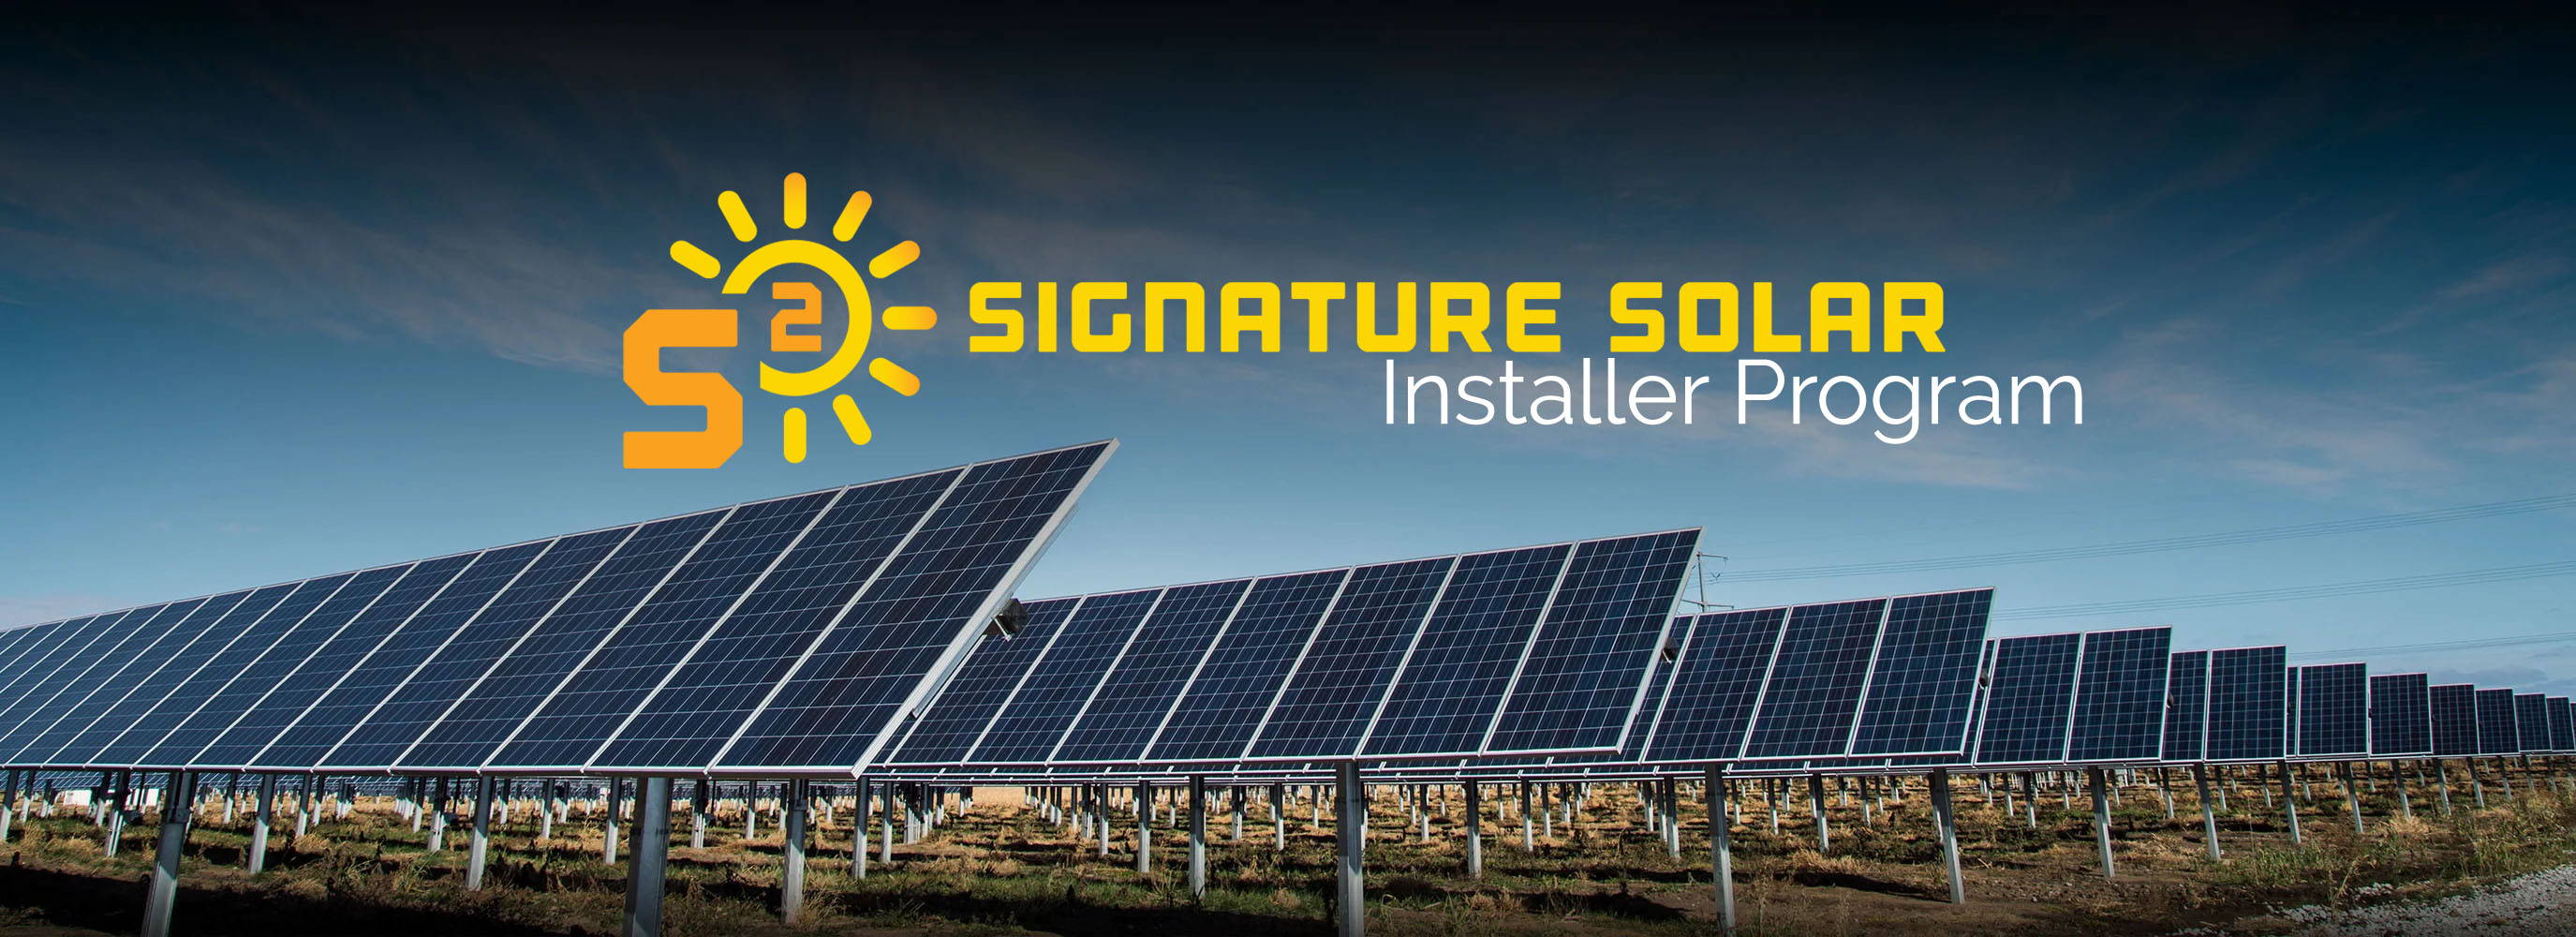 Signature Solar Installer Program